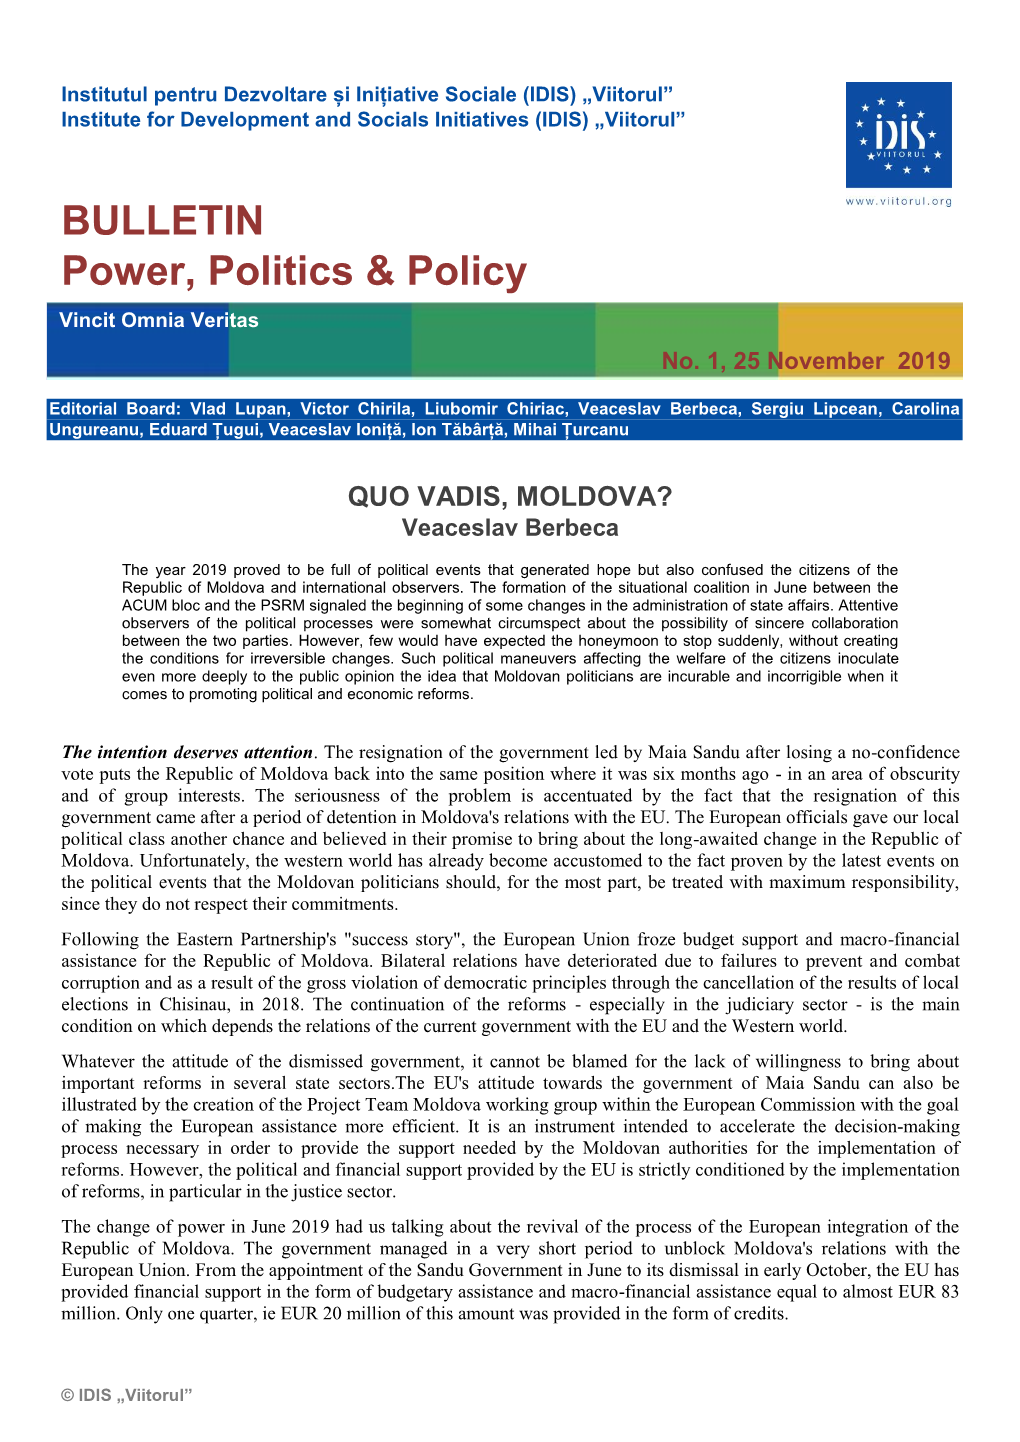 BULLETIN Power, Politics & Policy